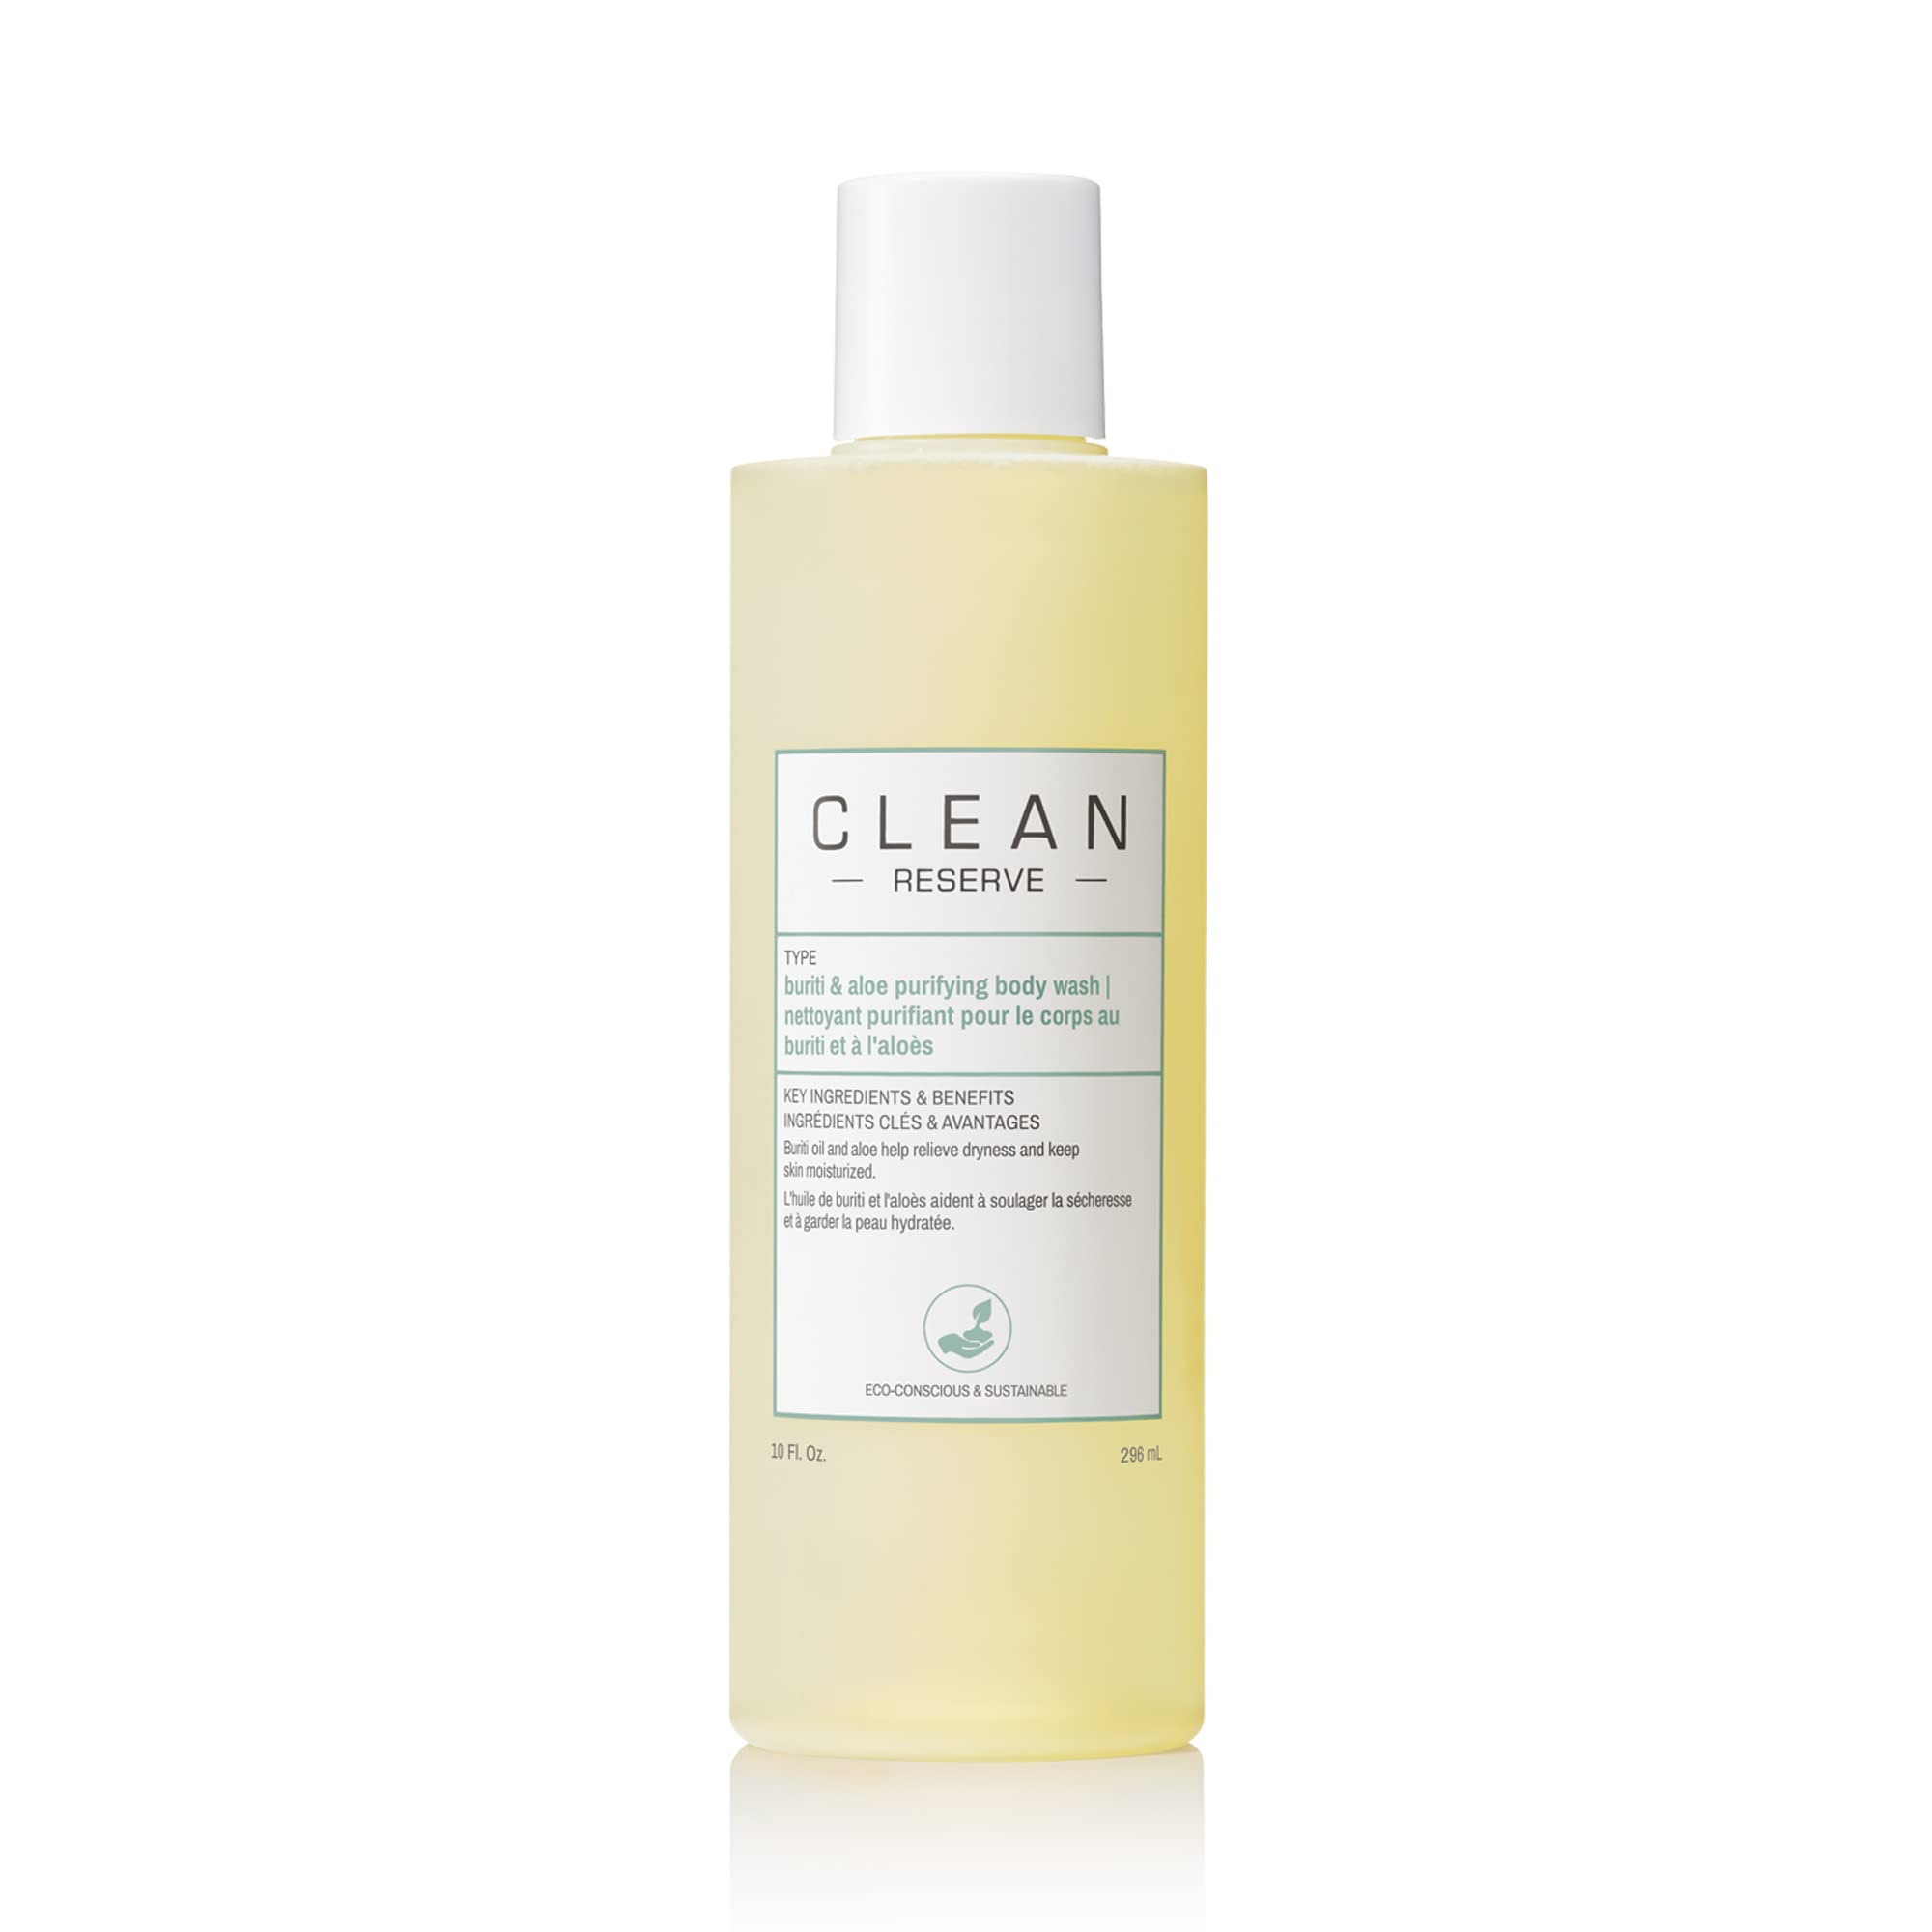 CLEAN RESERVE Buriti & Aloe Purifying Body Wash